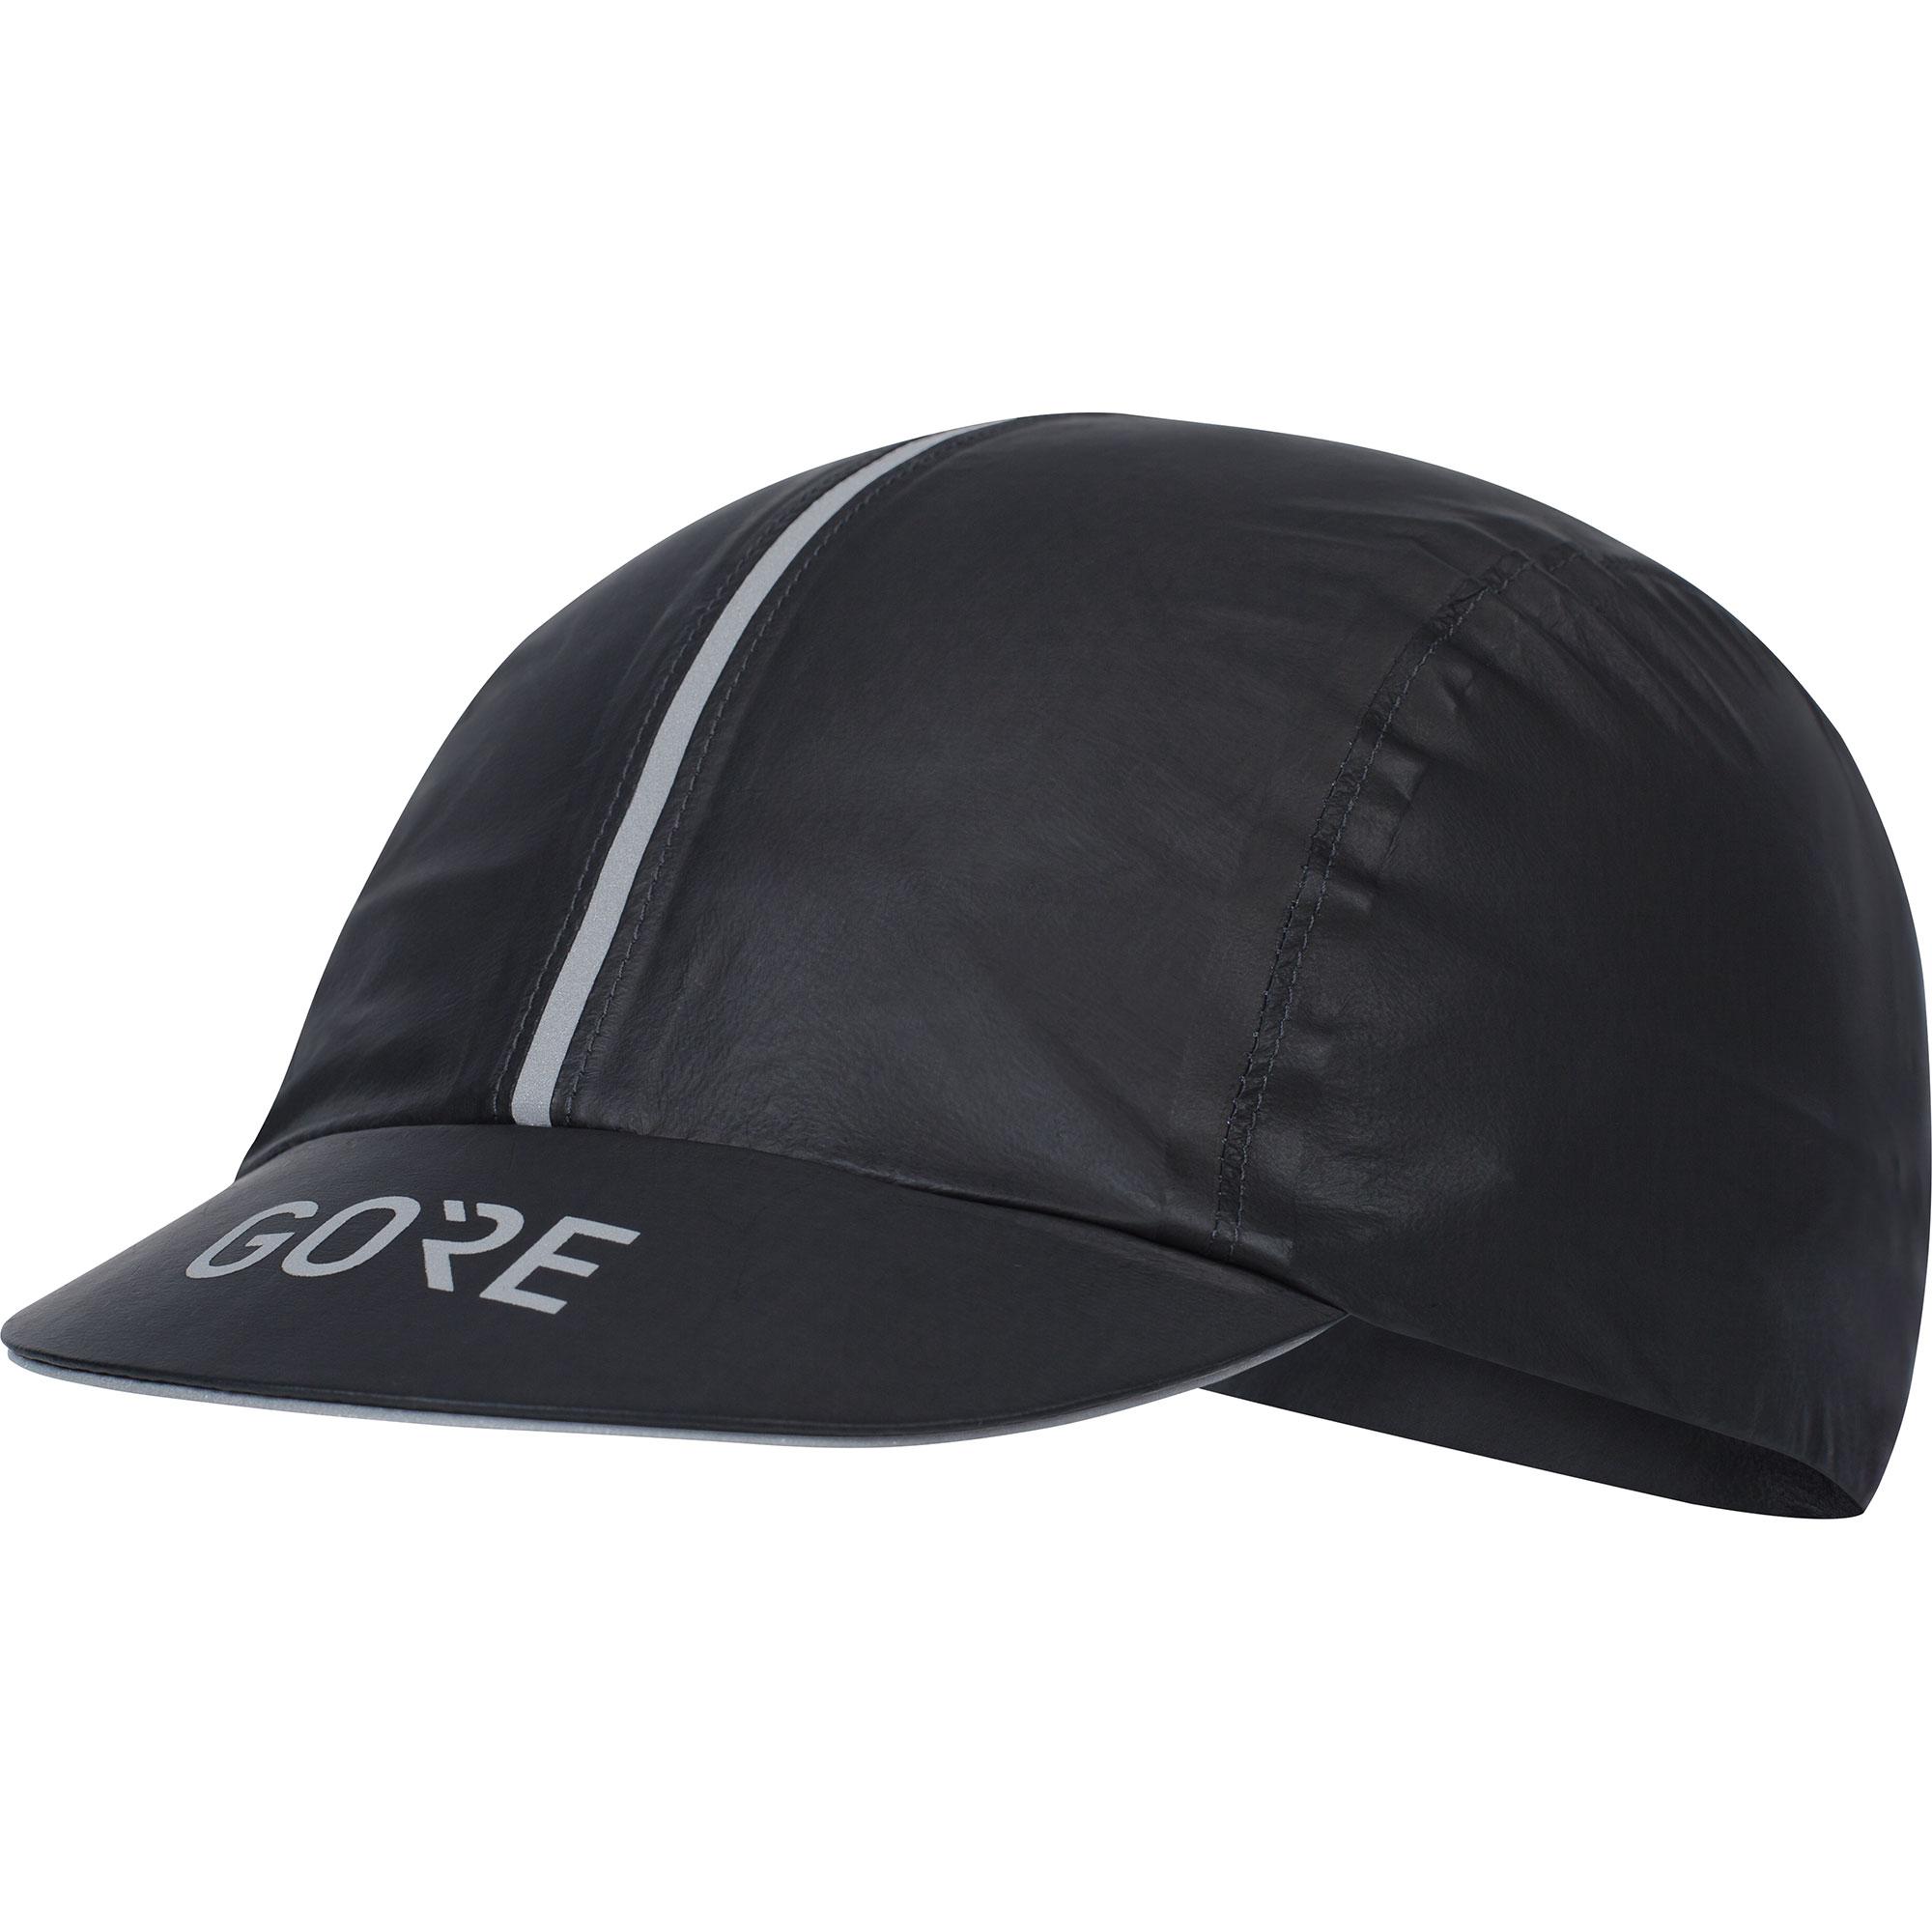 Gore Wear C7 Gore-tex Shakedry Cycling Cap - Black